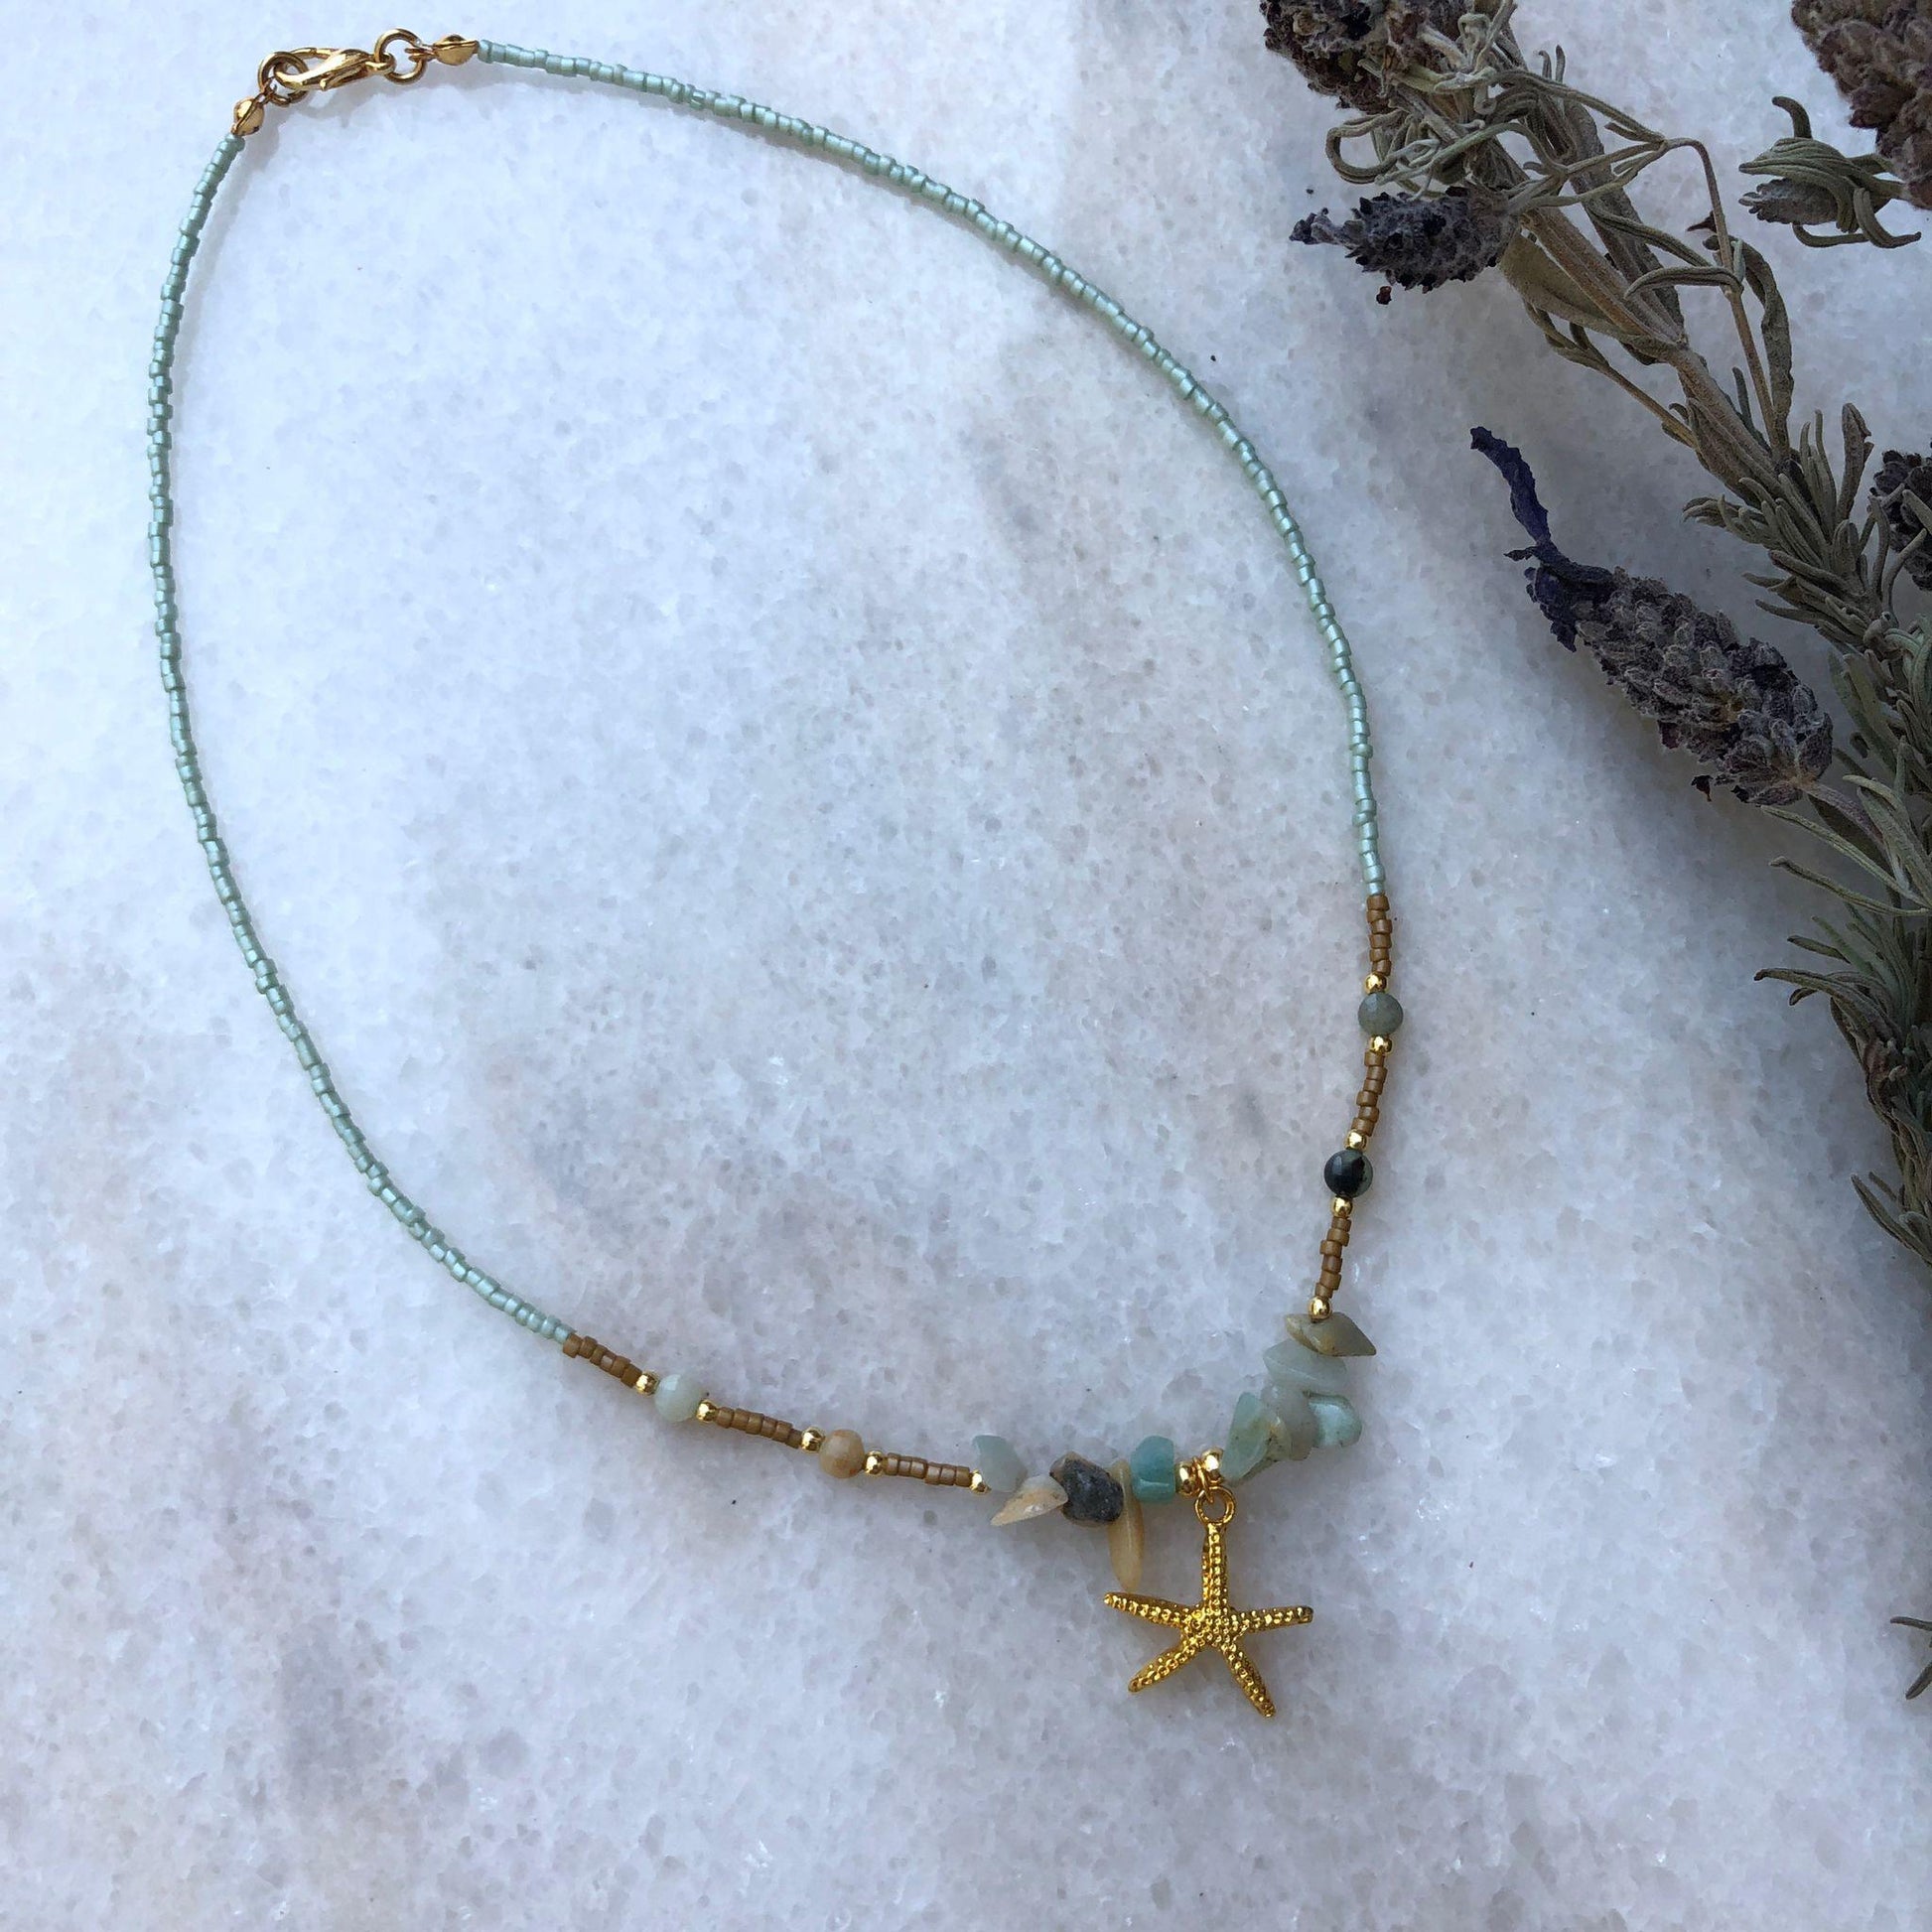 Handmade Necklace with Amazonite, Miyuki Seeds and Sand Beads - BeachPerfect.de